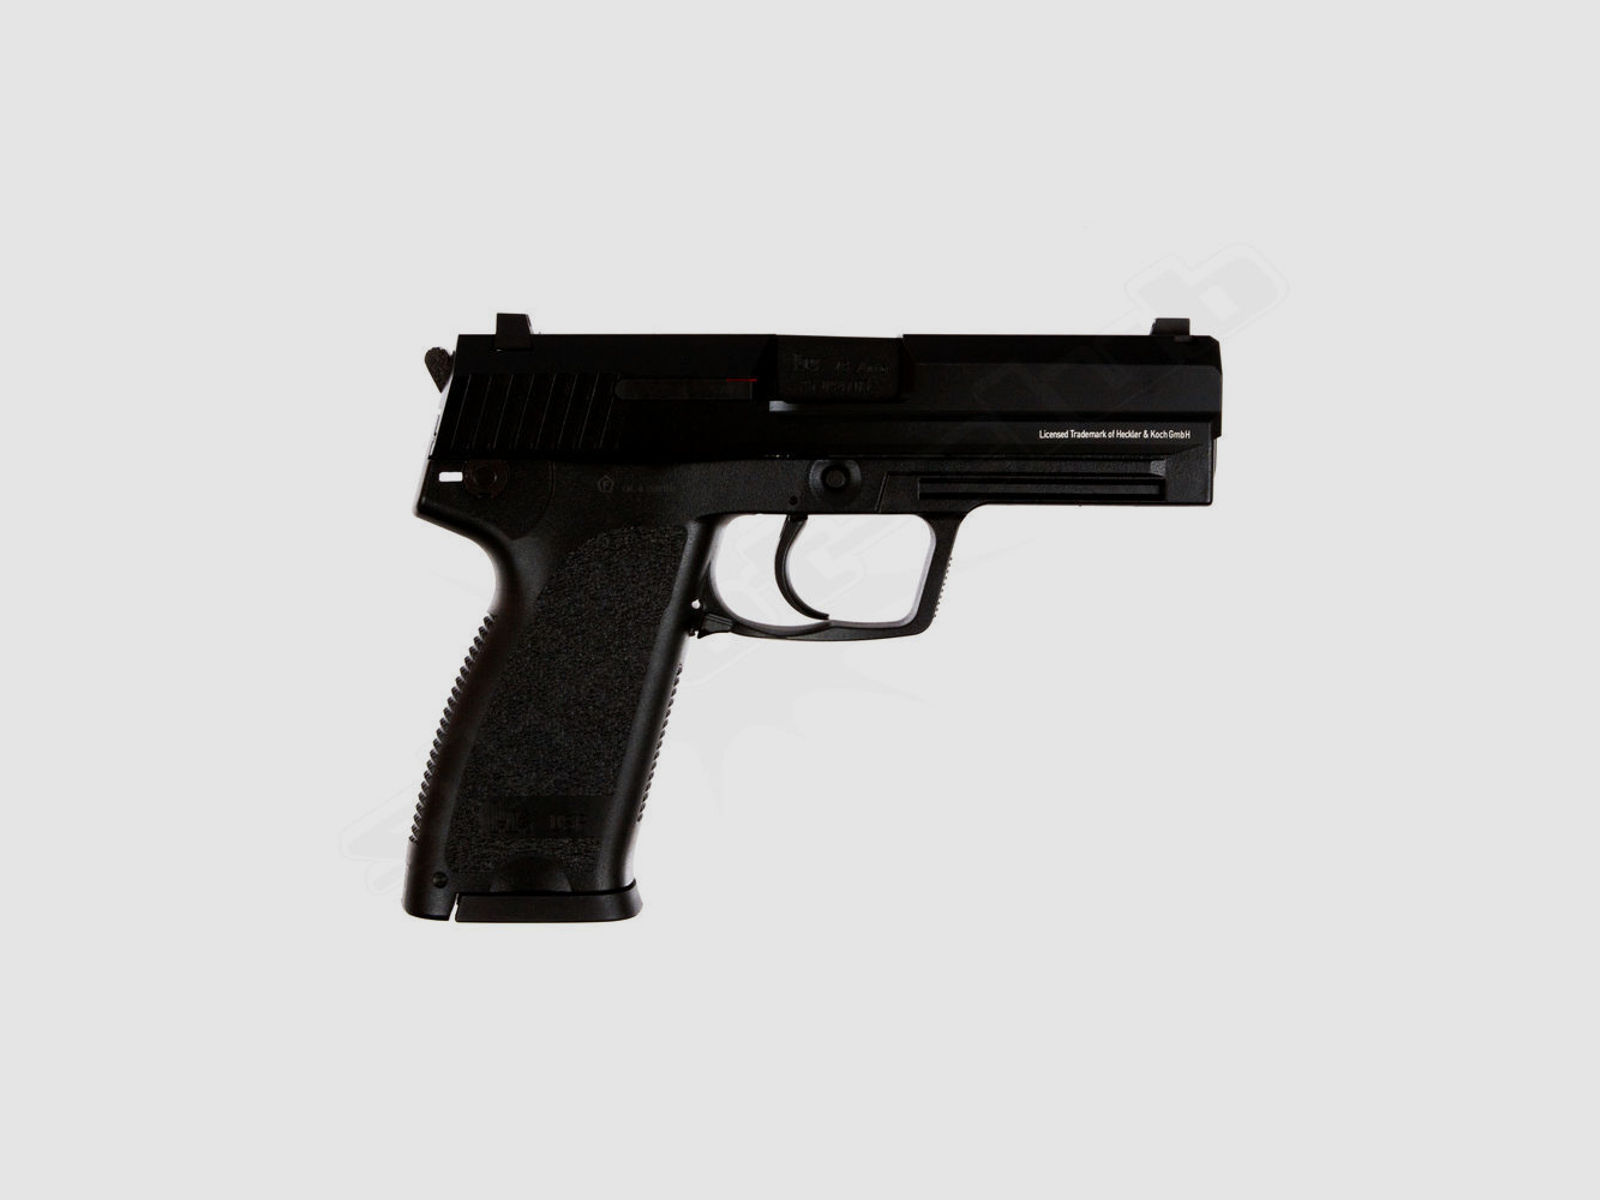 H&K USP .45 Airsoft Pistole Metall GBB 1 Joule - schwarz